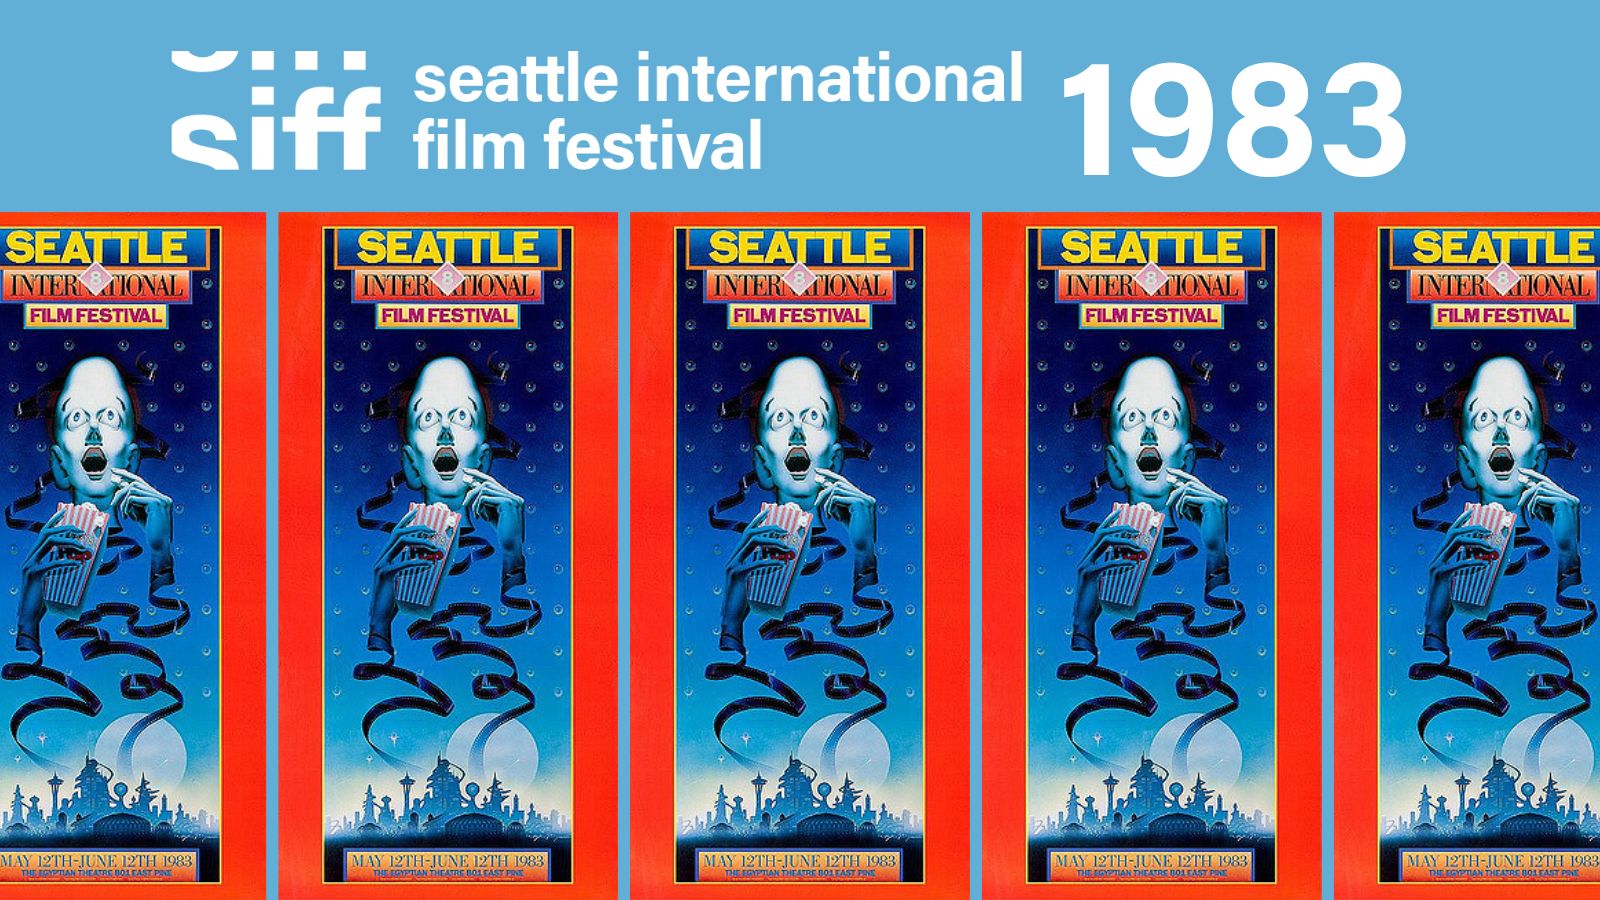 Seattle International Film Festival 1983